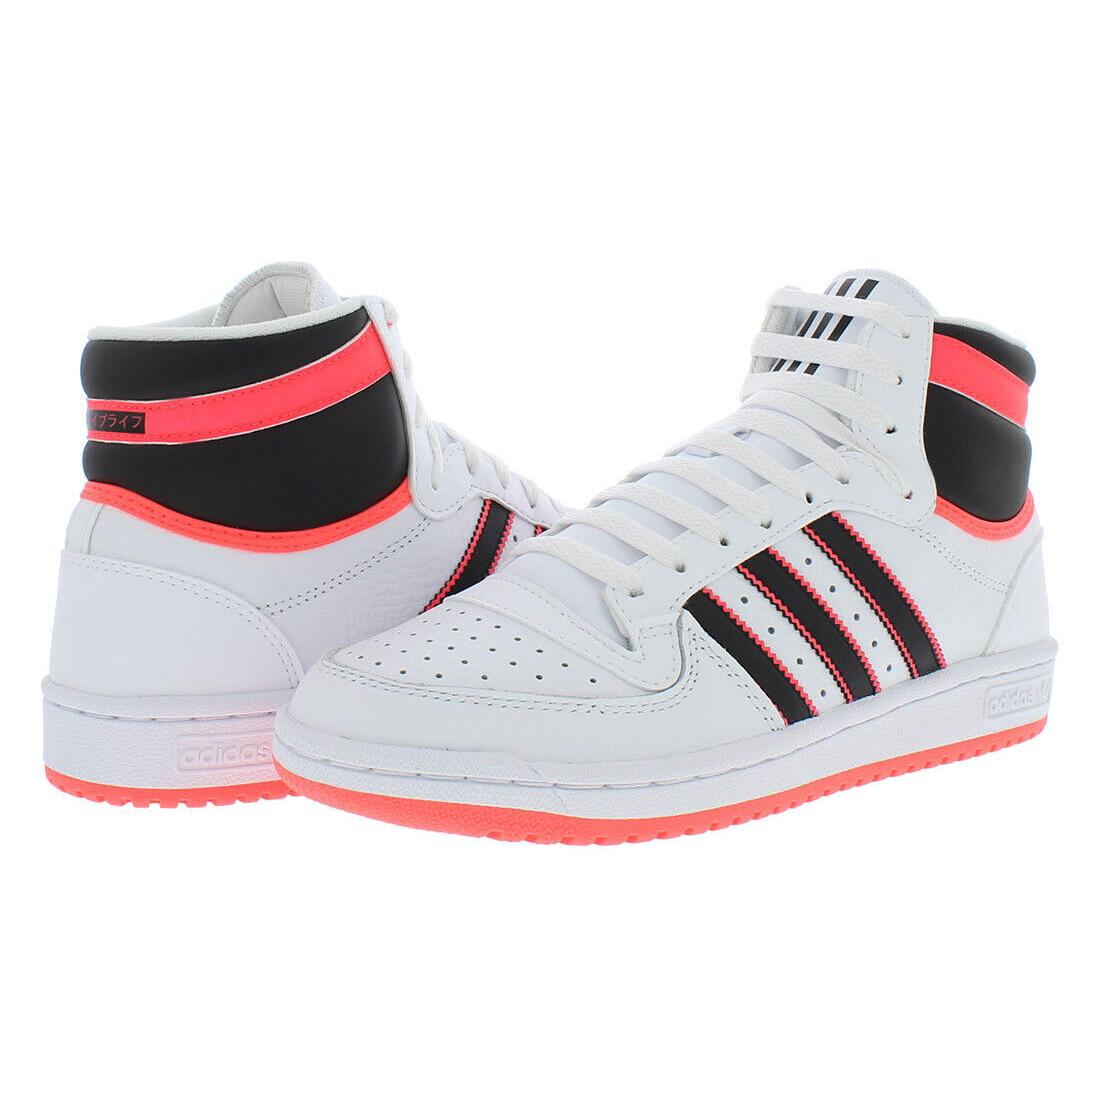 Adidas Top Ten Rb Mens Shoes - White/Black, Main: White